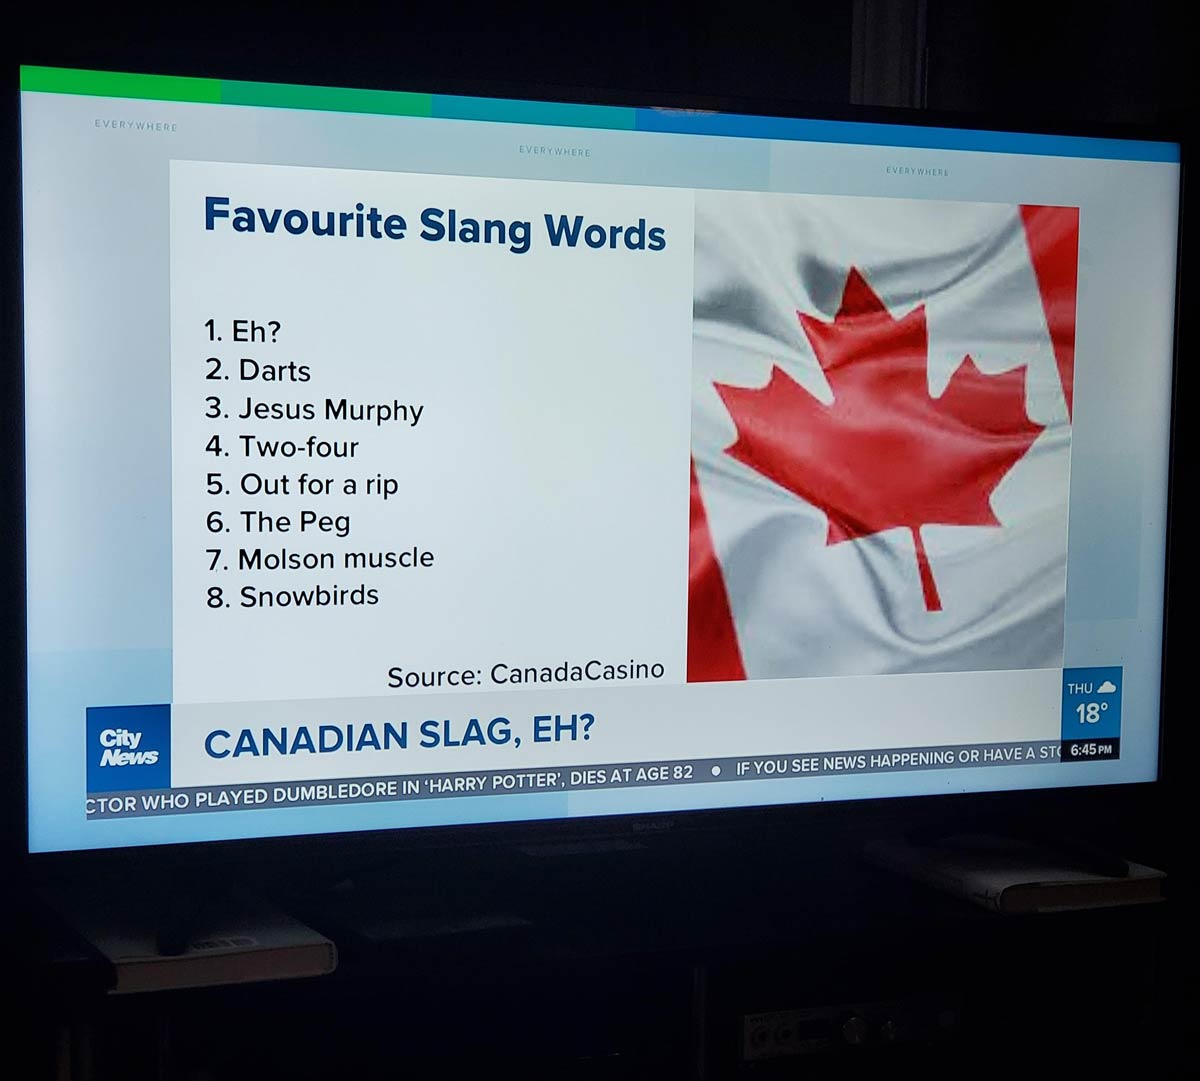 Canadian slang, Eh?